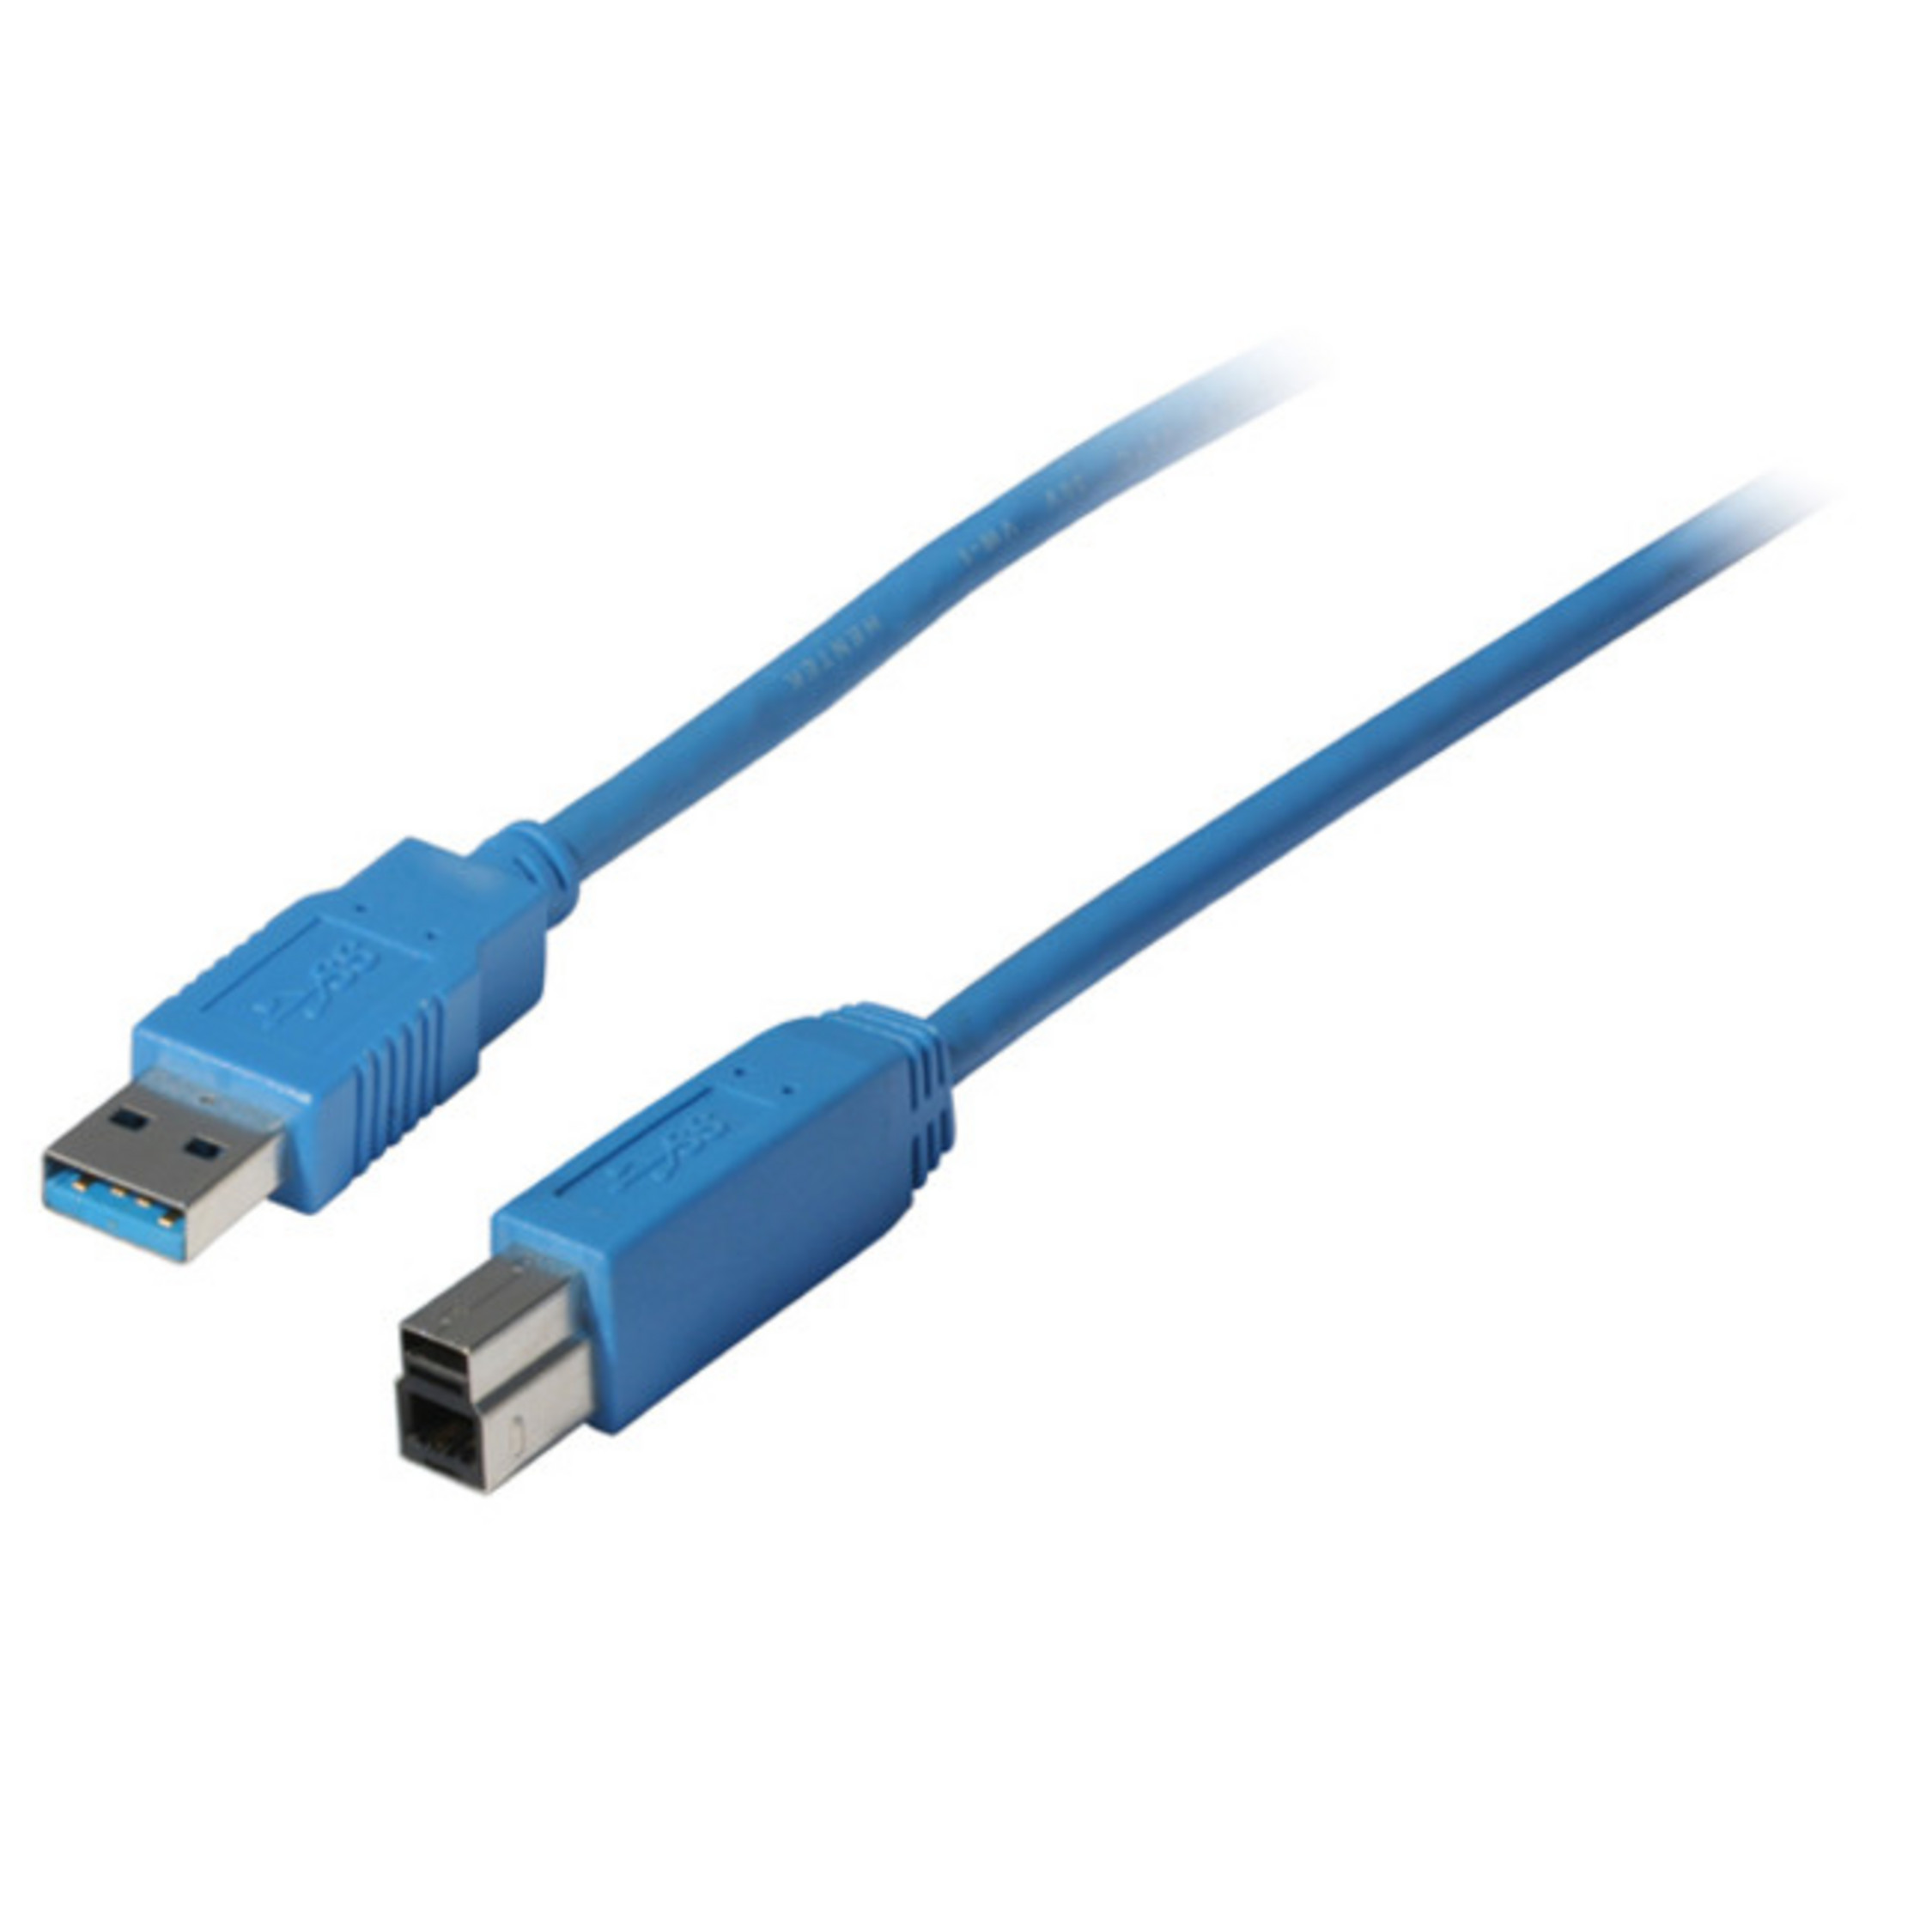 B CONNECTIVITY blau S/CONN 3.0 Kabel Stecker 1,8m / Kabel MAXIMUM Stecker USB USB A USB